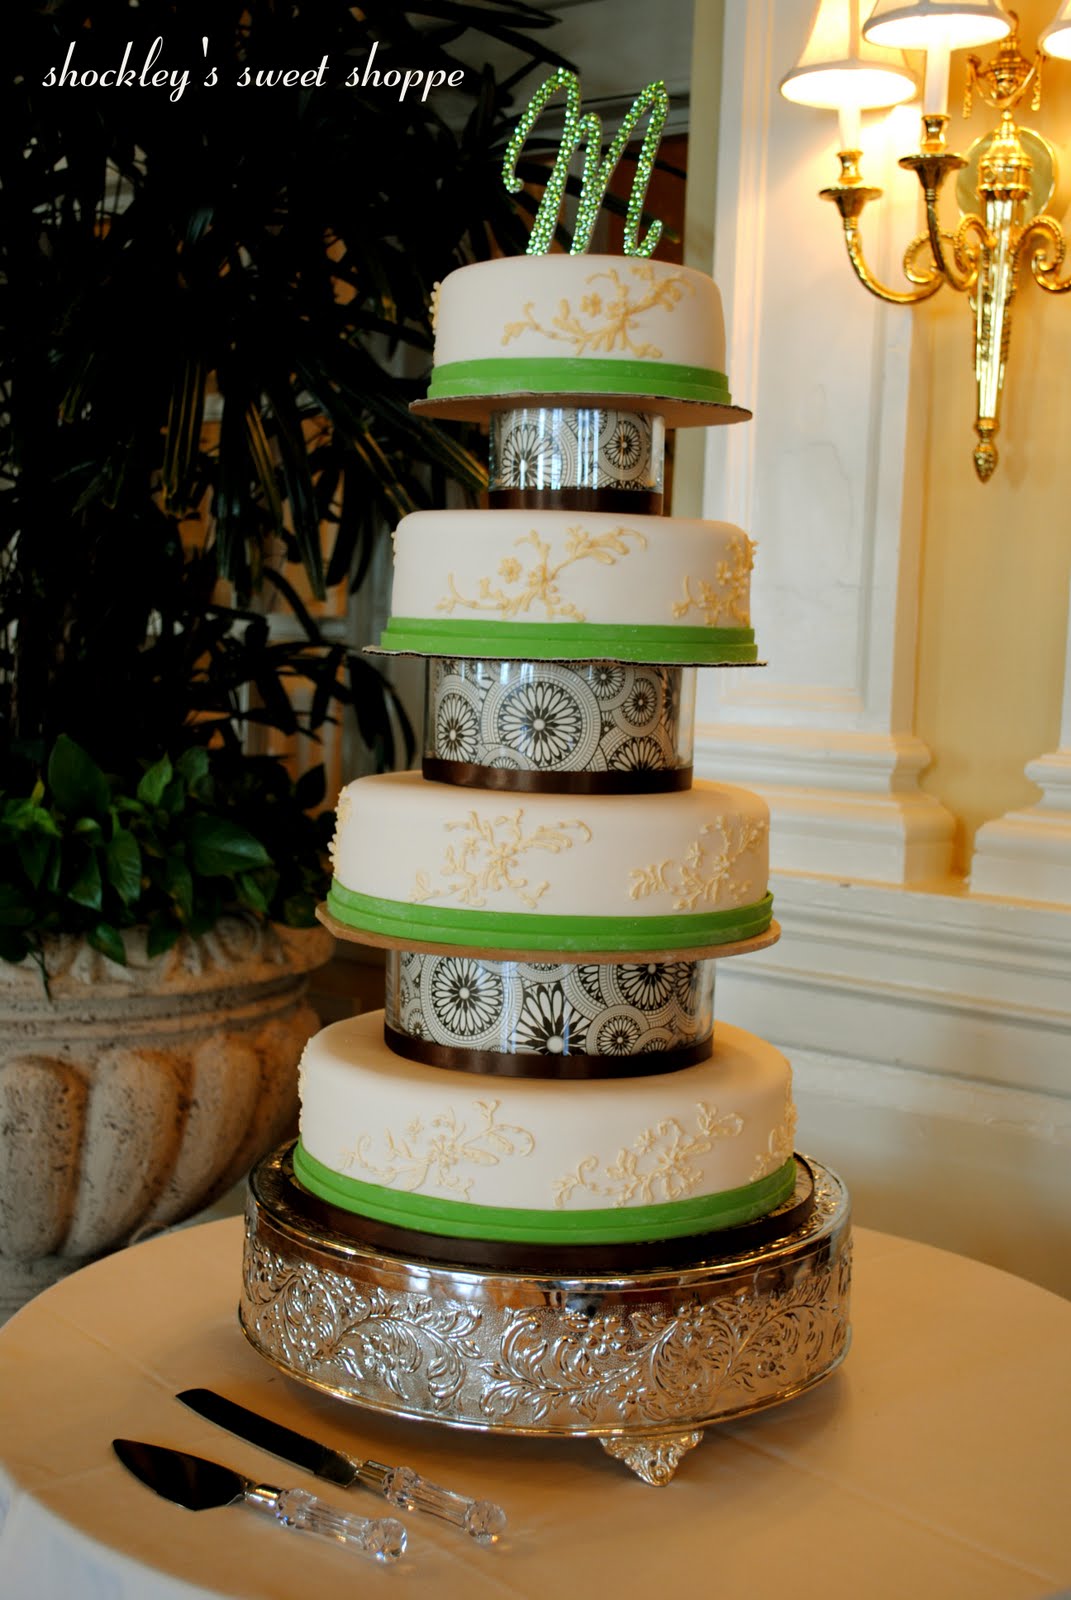 This amazing wedding cake for